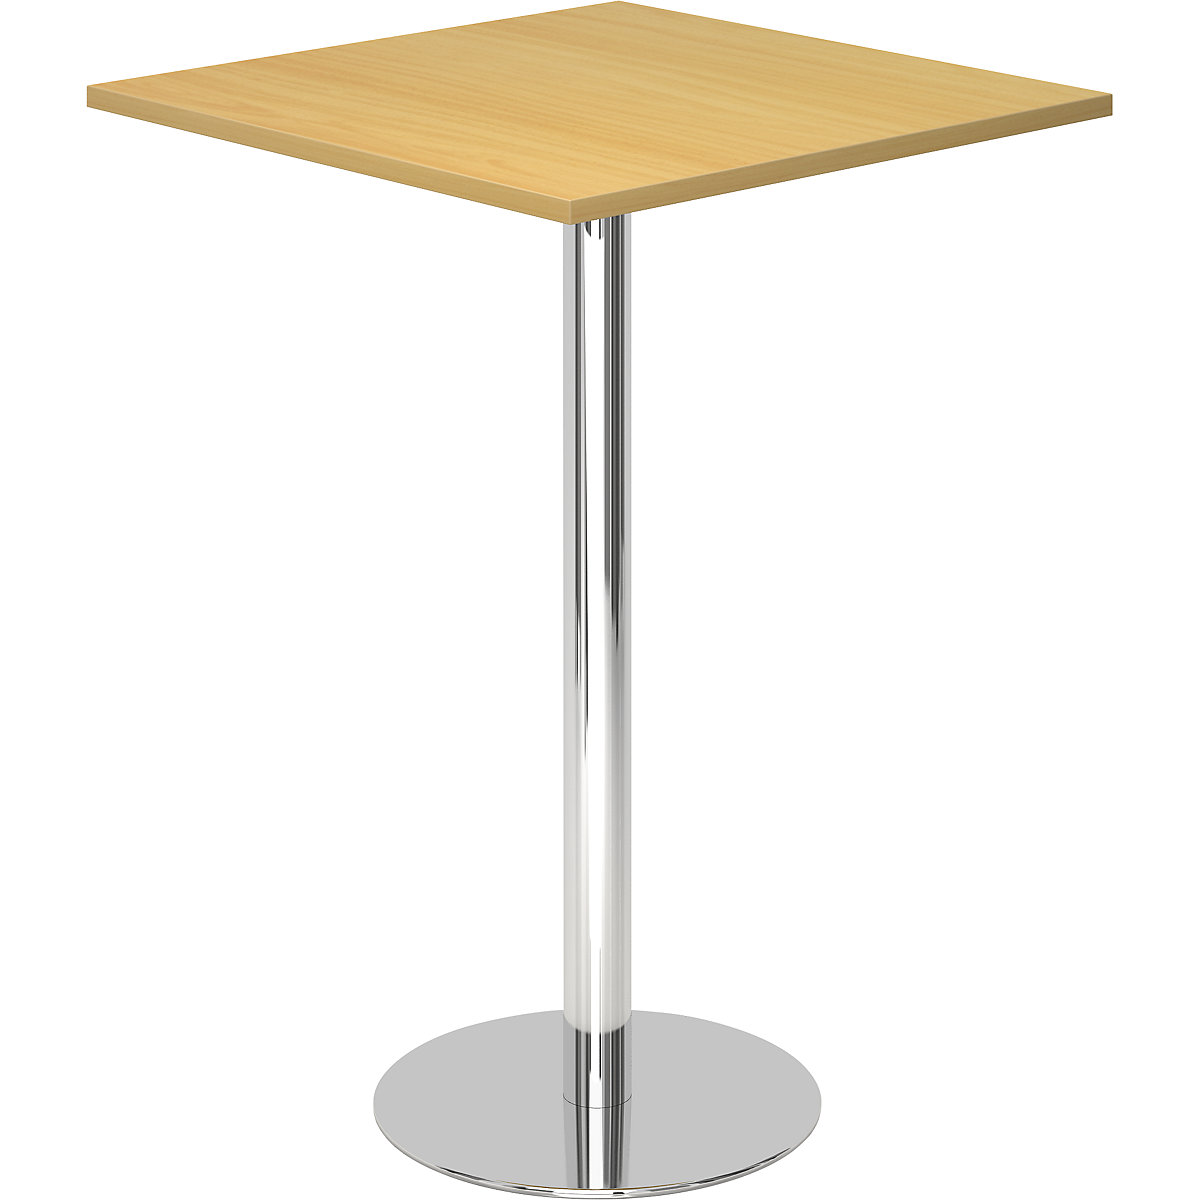 Barový stůl, d x š 800 x 800 mm, výška 1116 mm, pochromovaný podstavec, deska bukový dekor